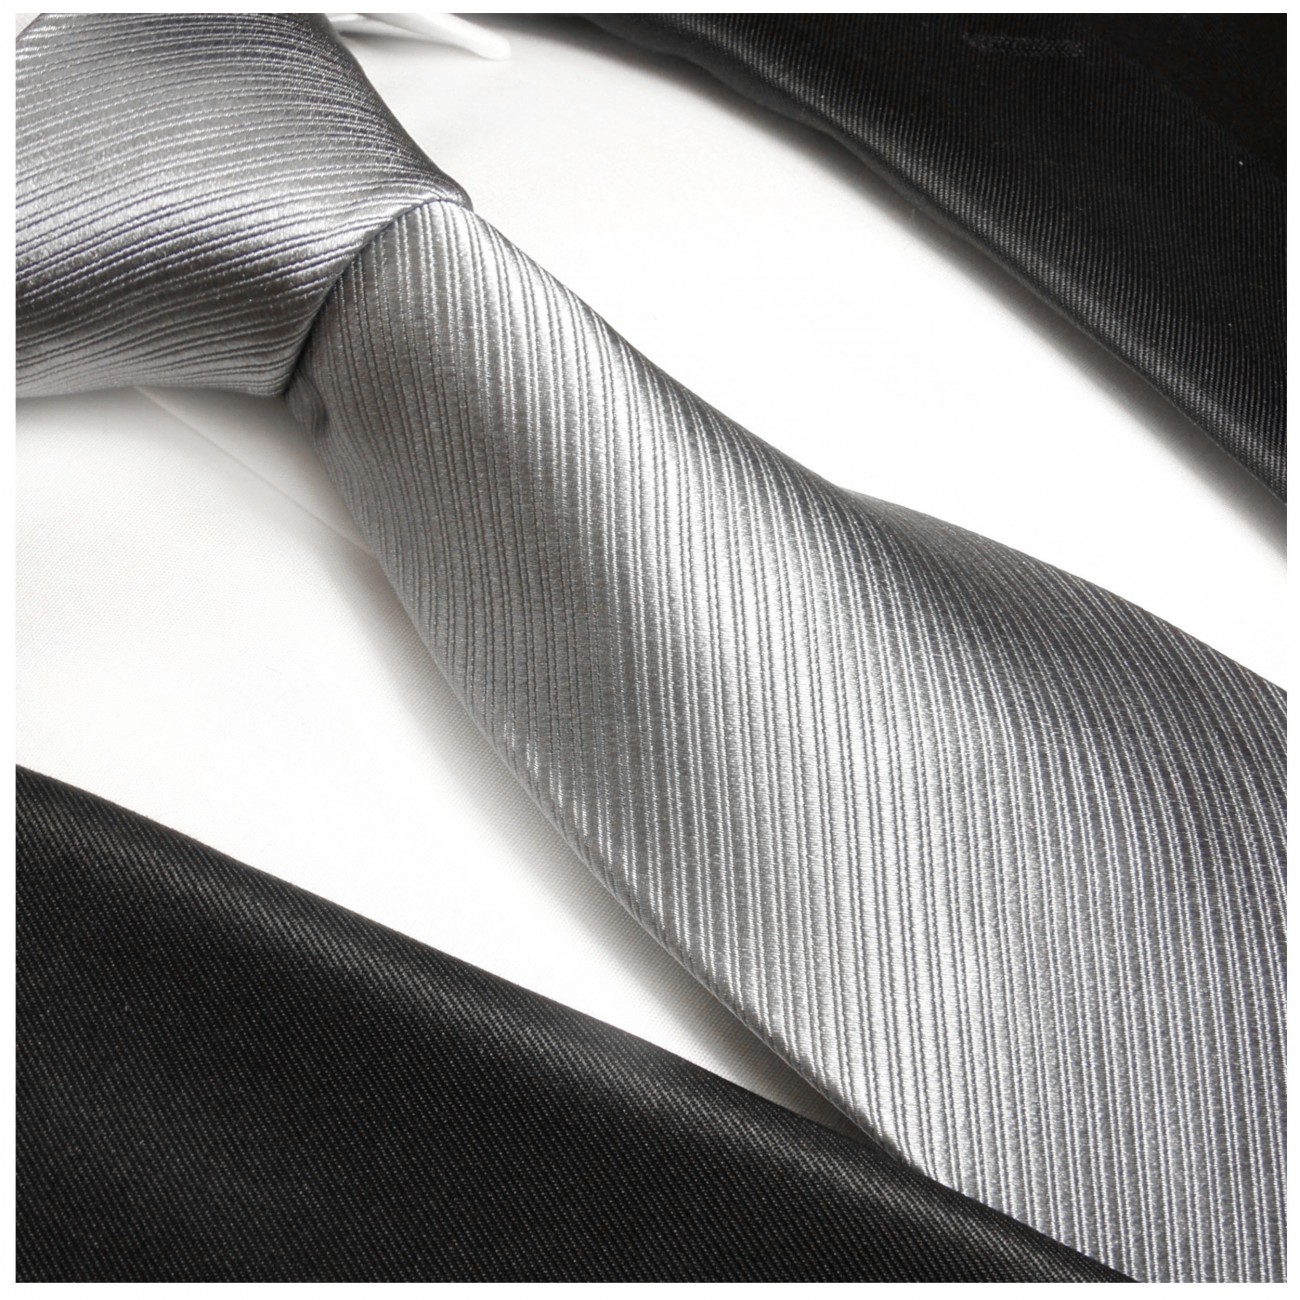 Krawatte silber grau uni Paul Malone | - JETZT 977 Shop BESTELLEN